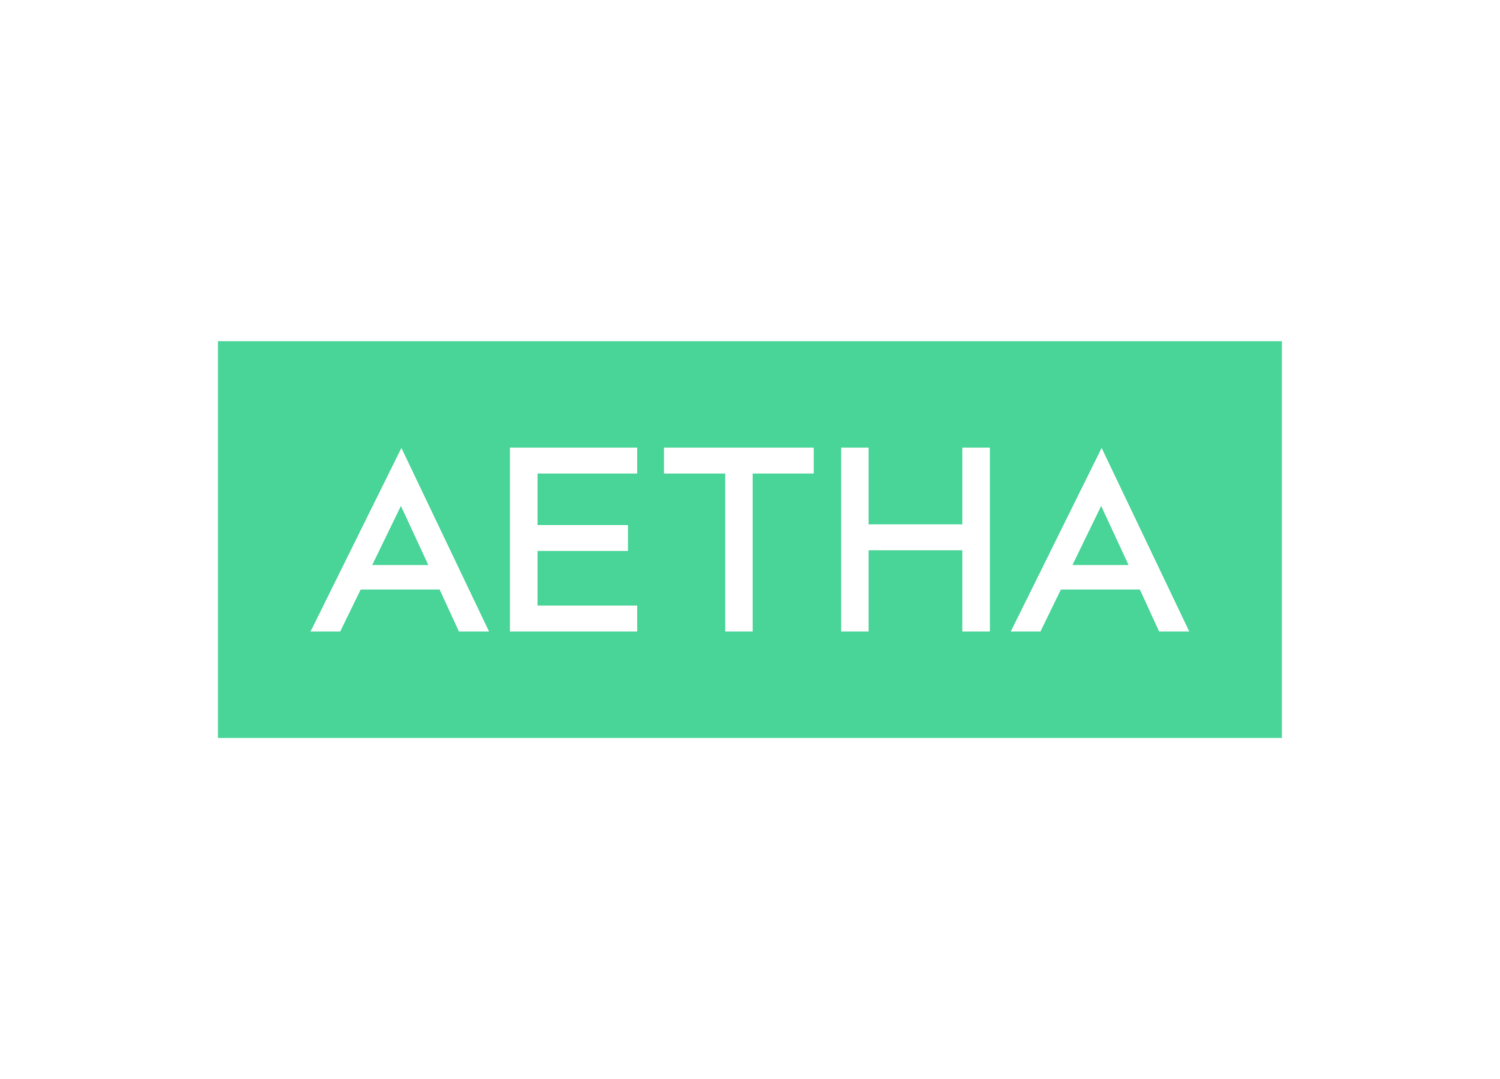 Aetha Design - Product Design 